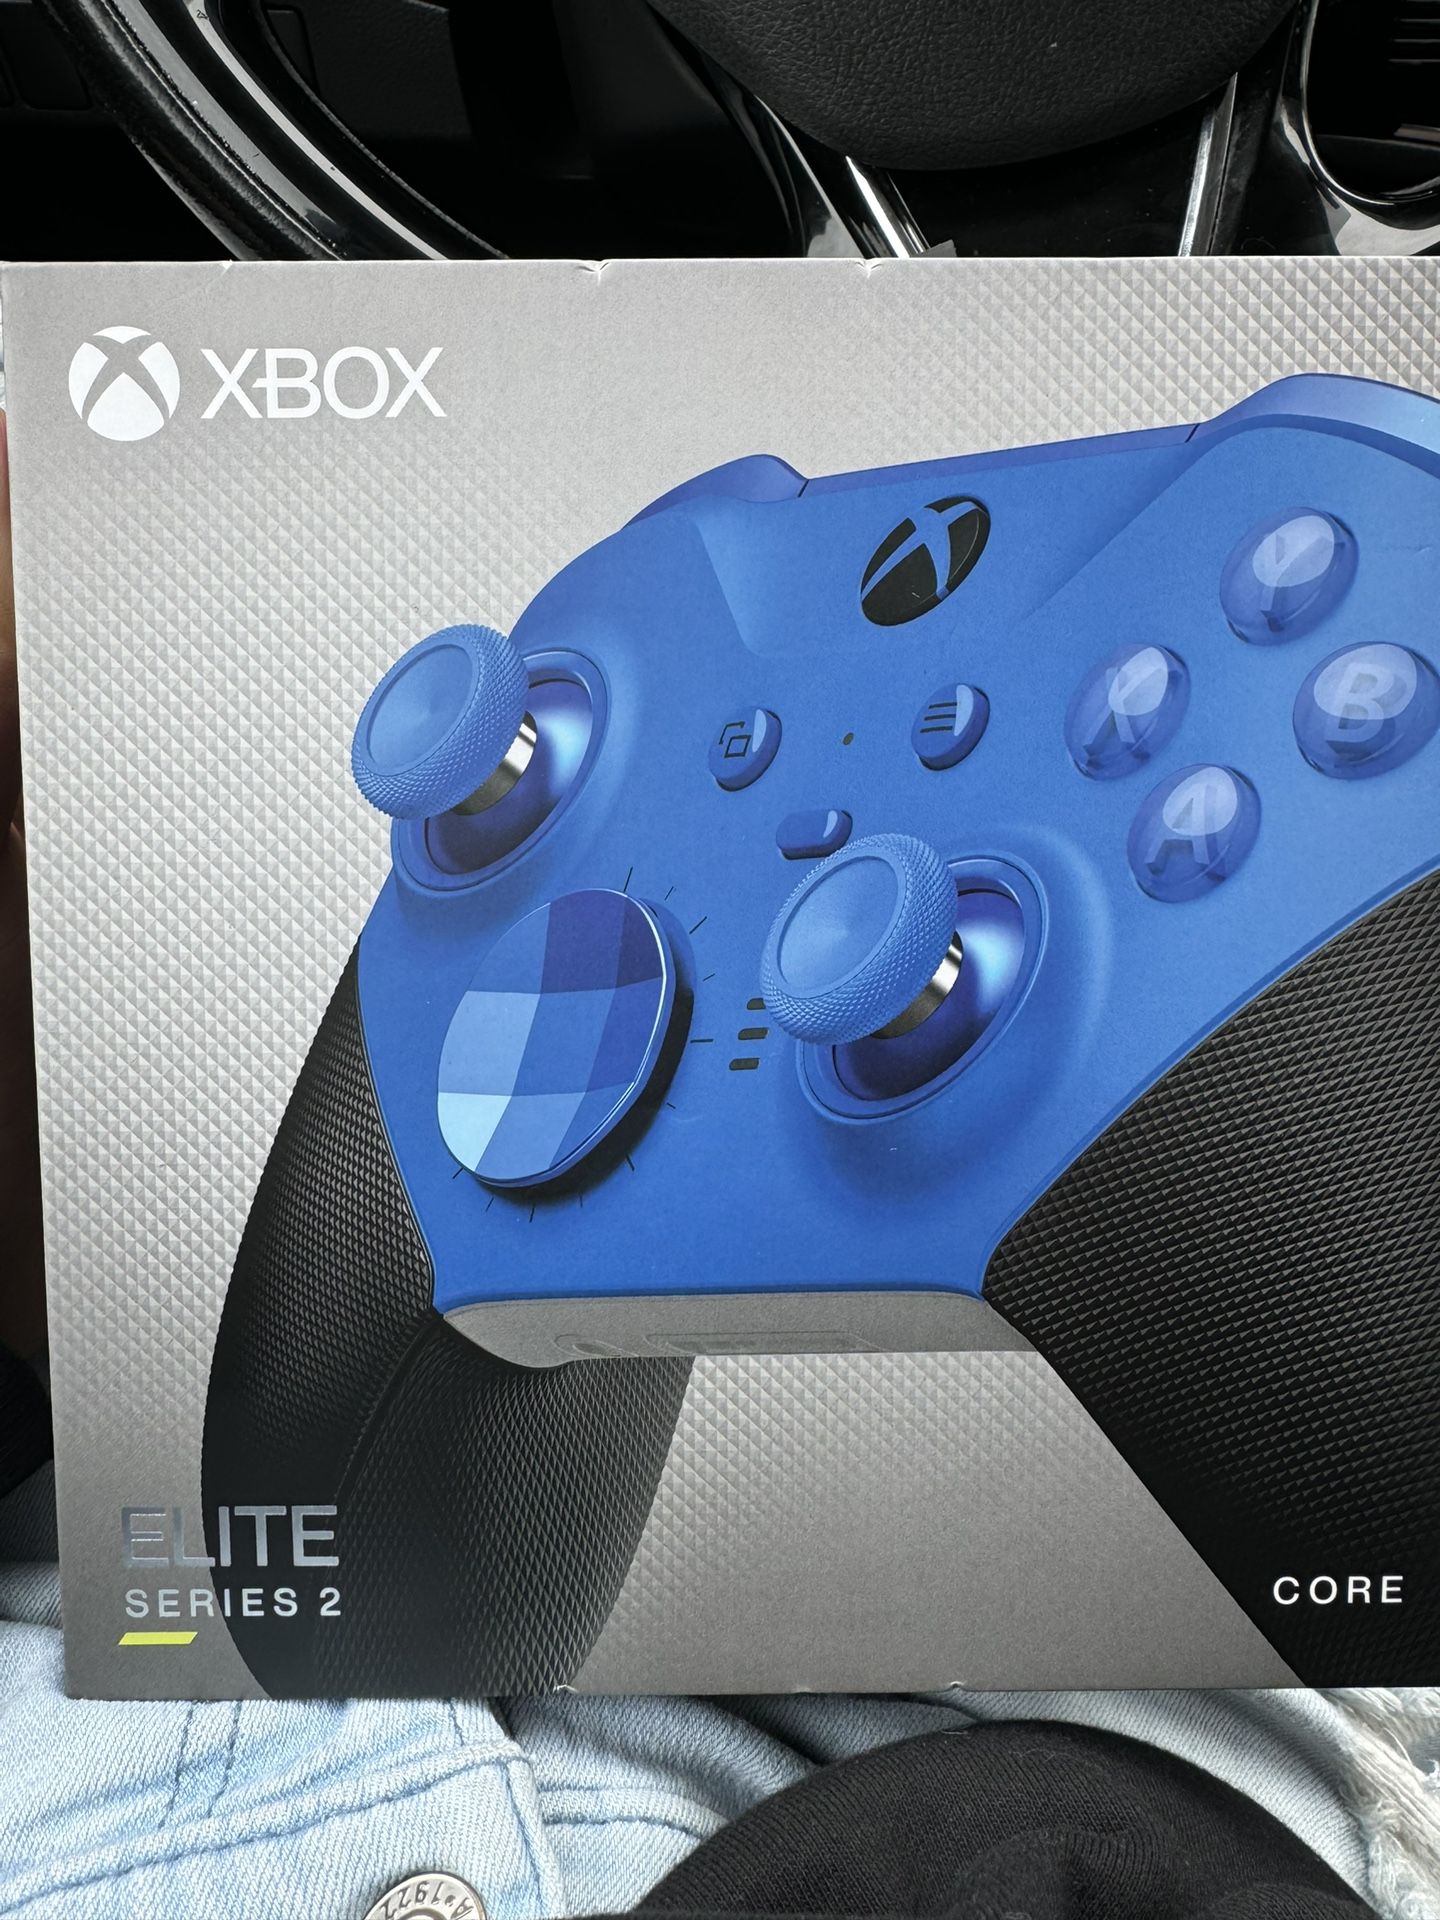 Xbox elites series 2 controller